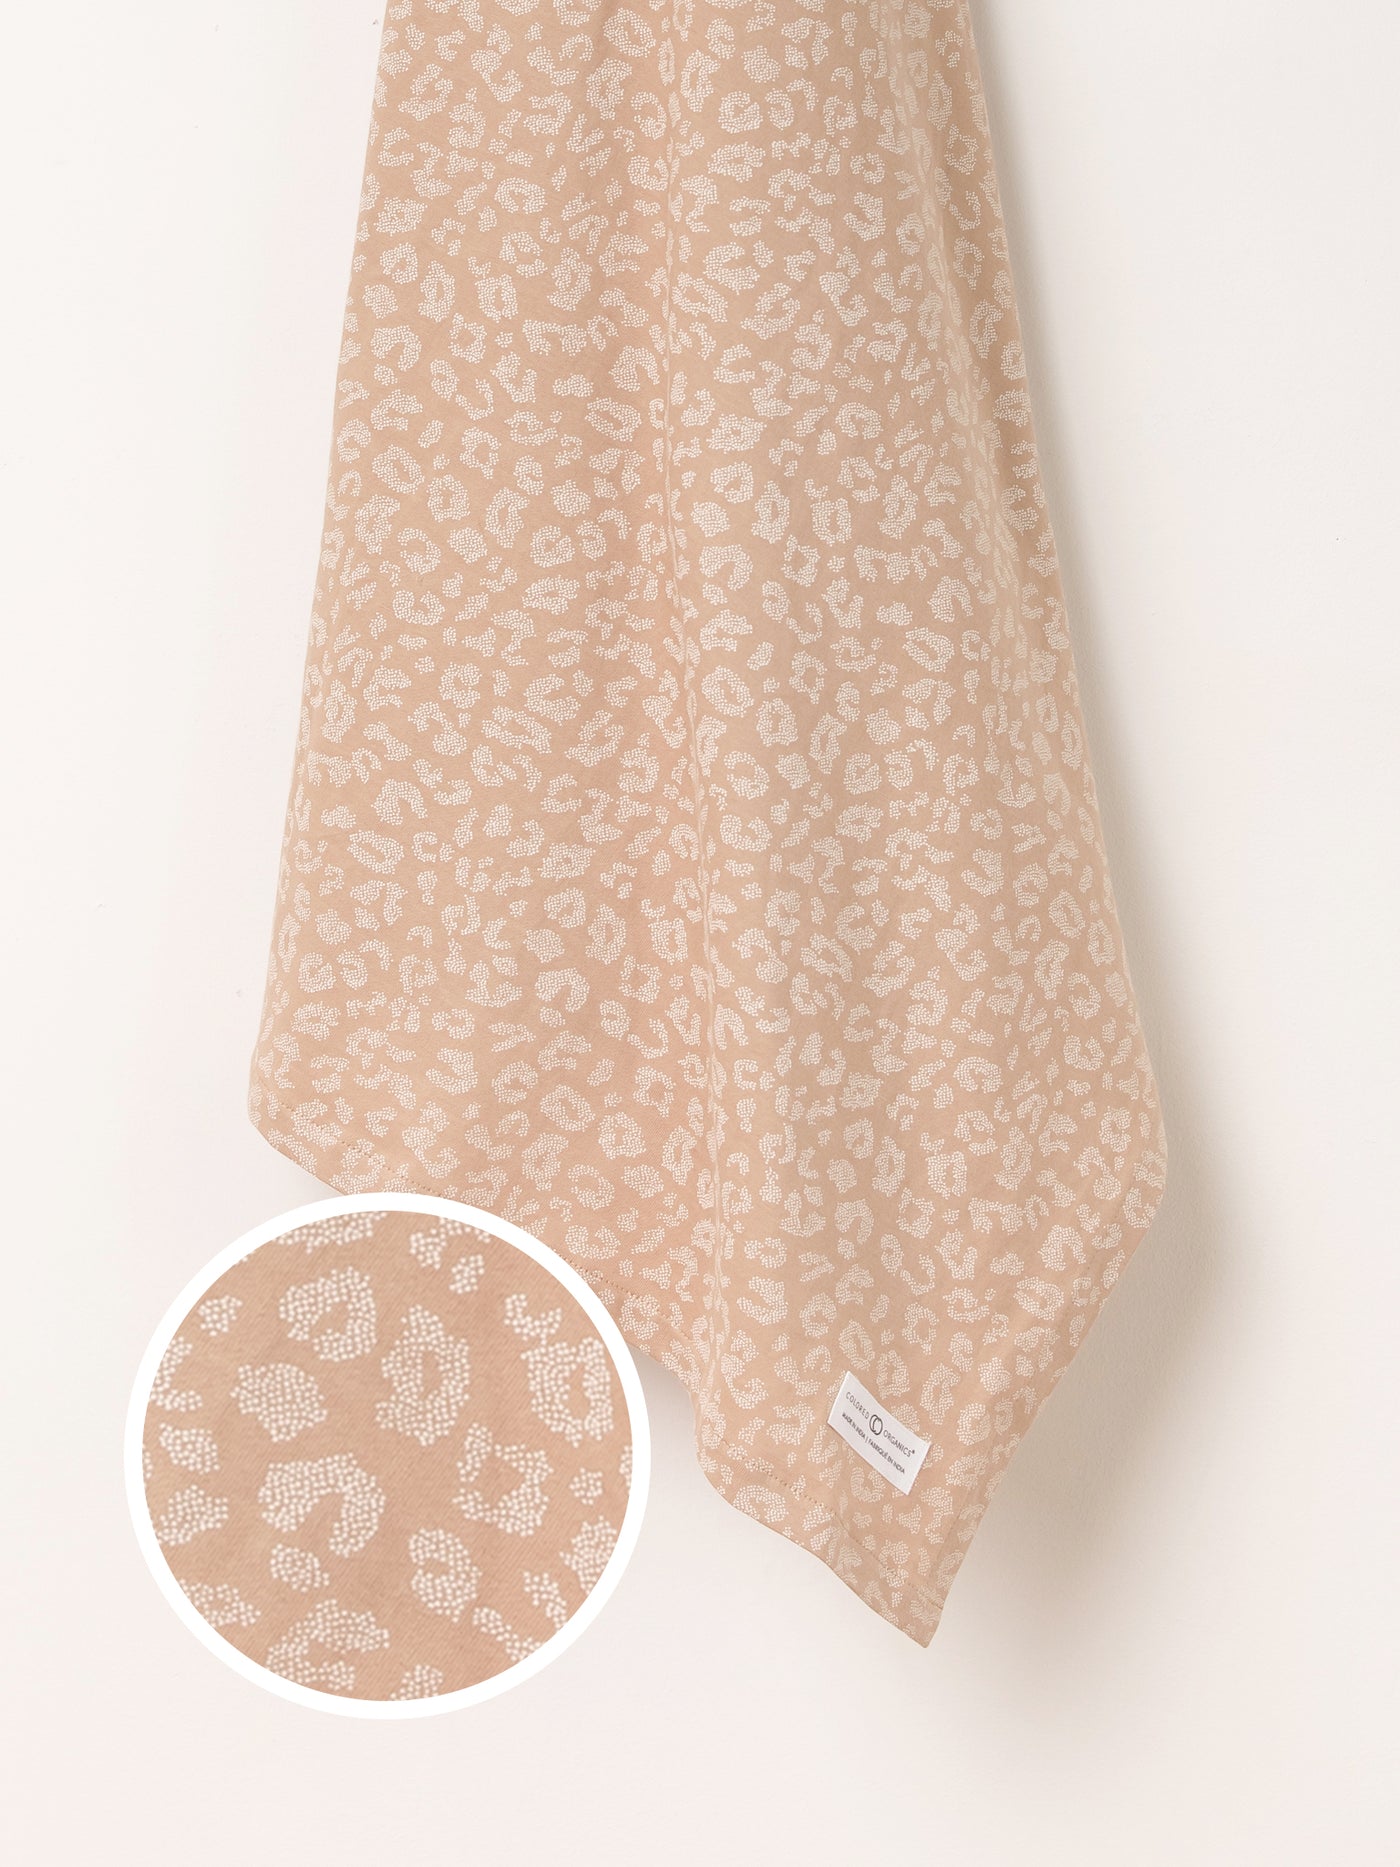 Colored Organics Swaddle Blanket - Leopard / Tan